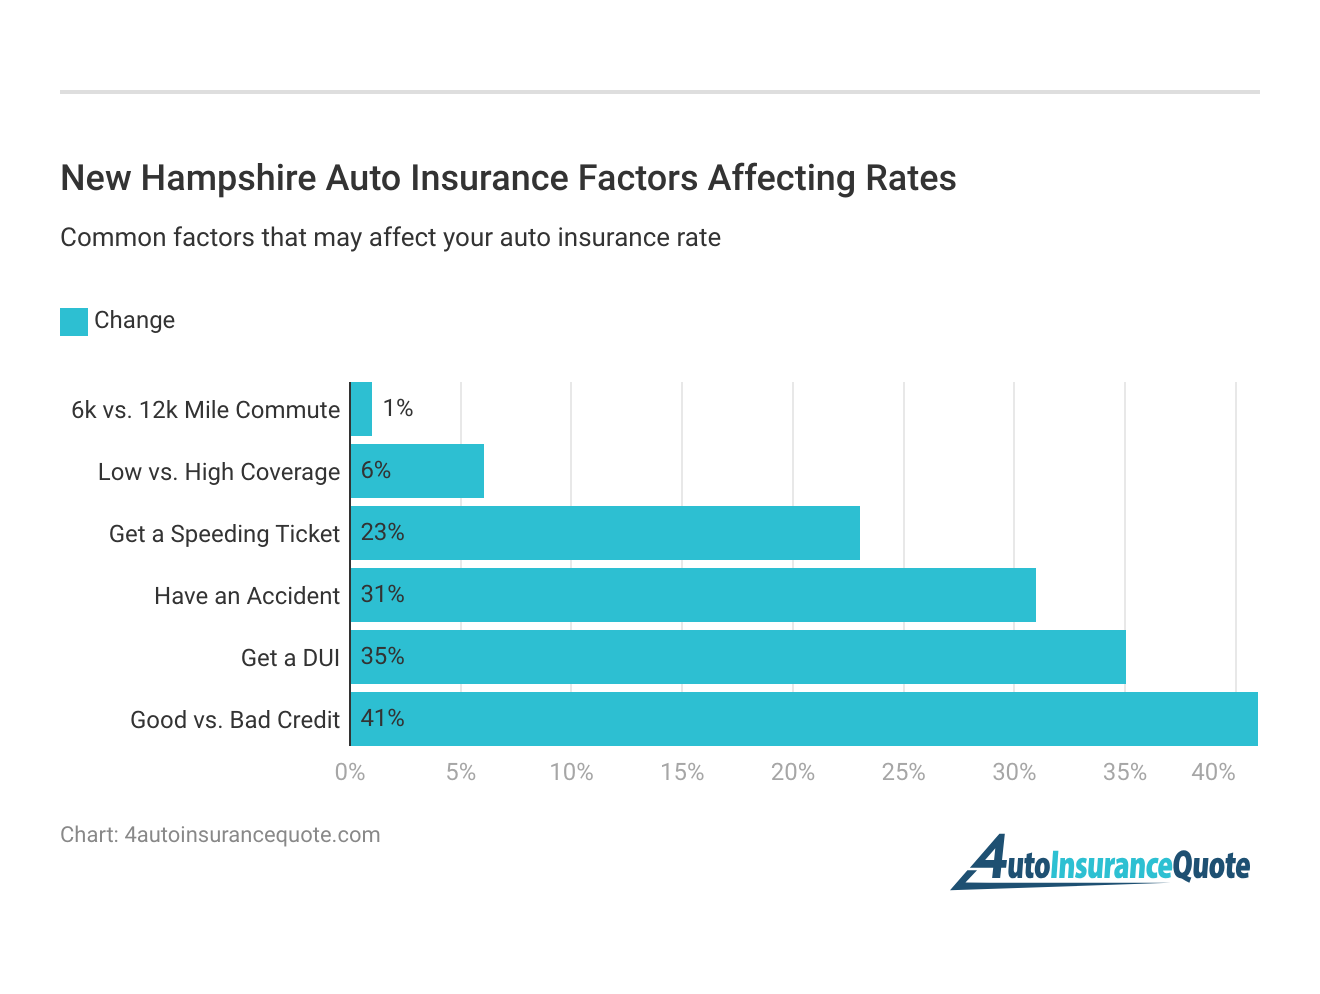 <h3>New Hampshire Auto Insurance Factors Affecting Rates</h3>